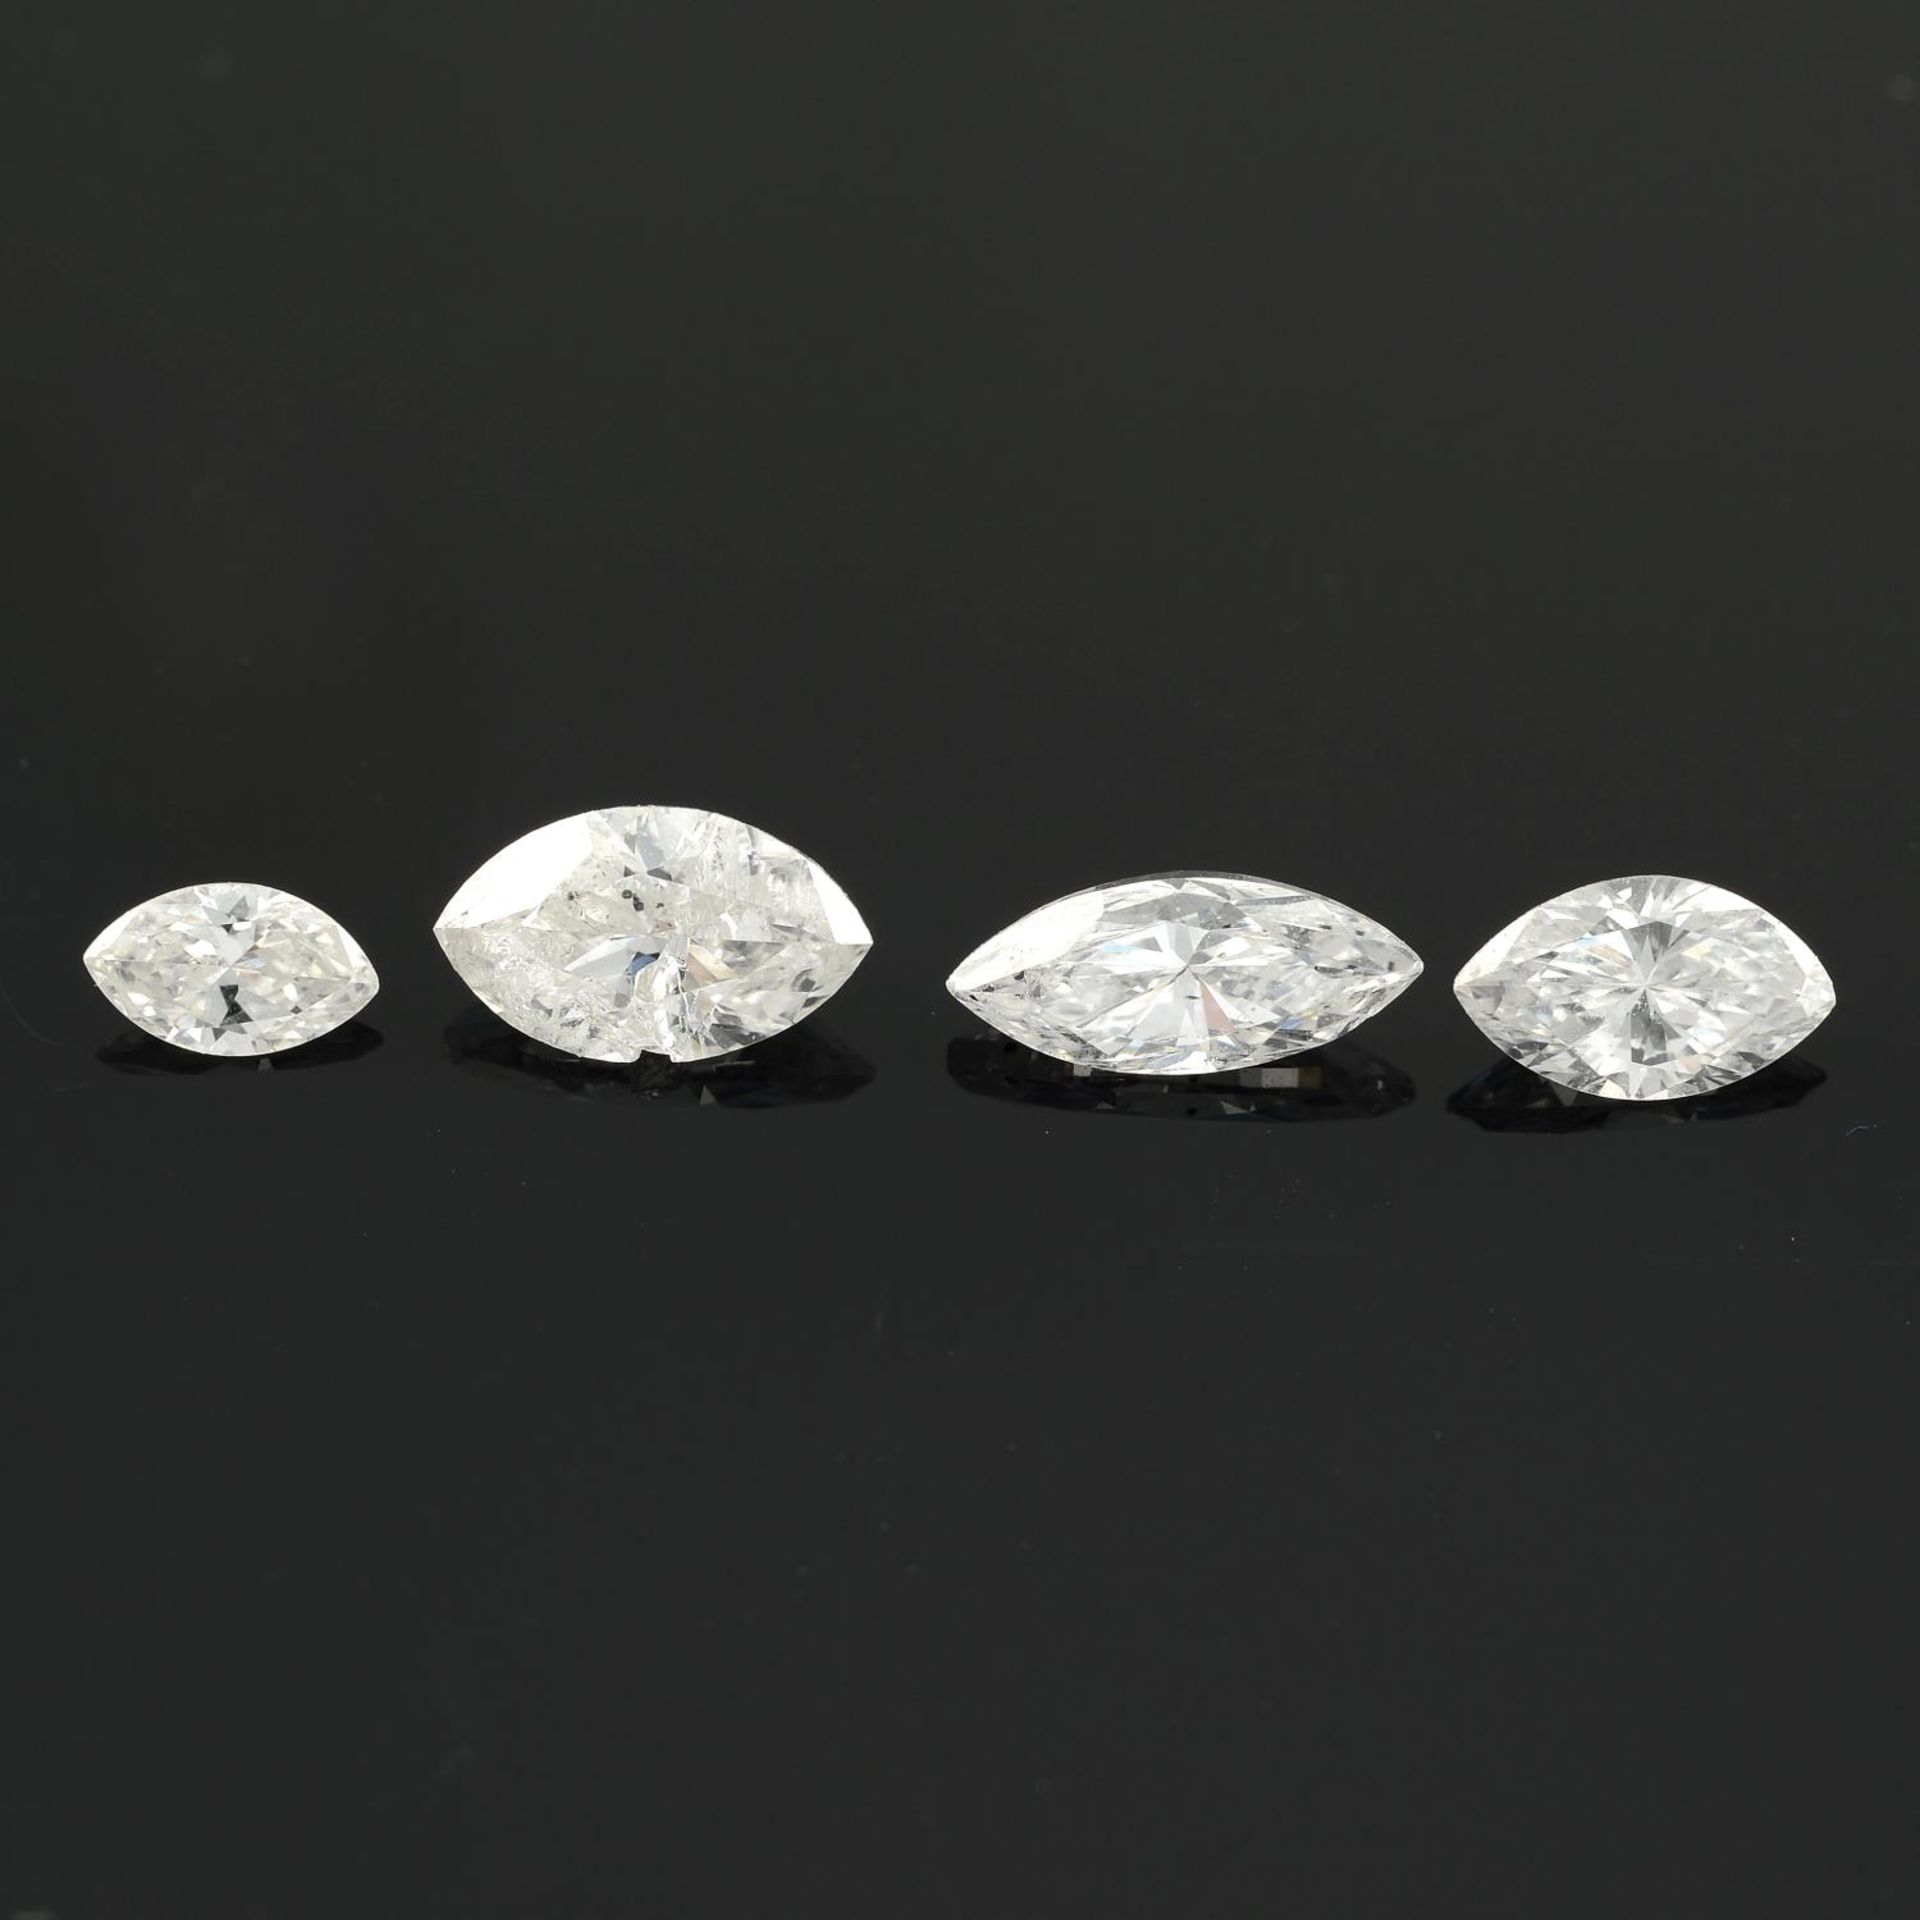 Four marquise shape diamonds.